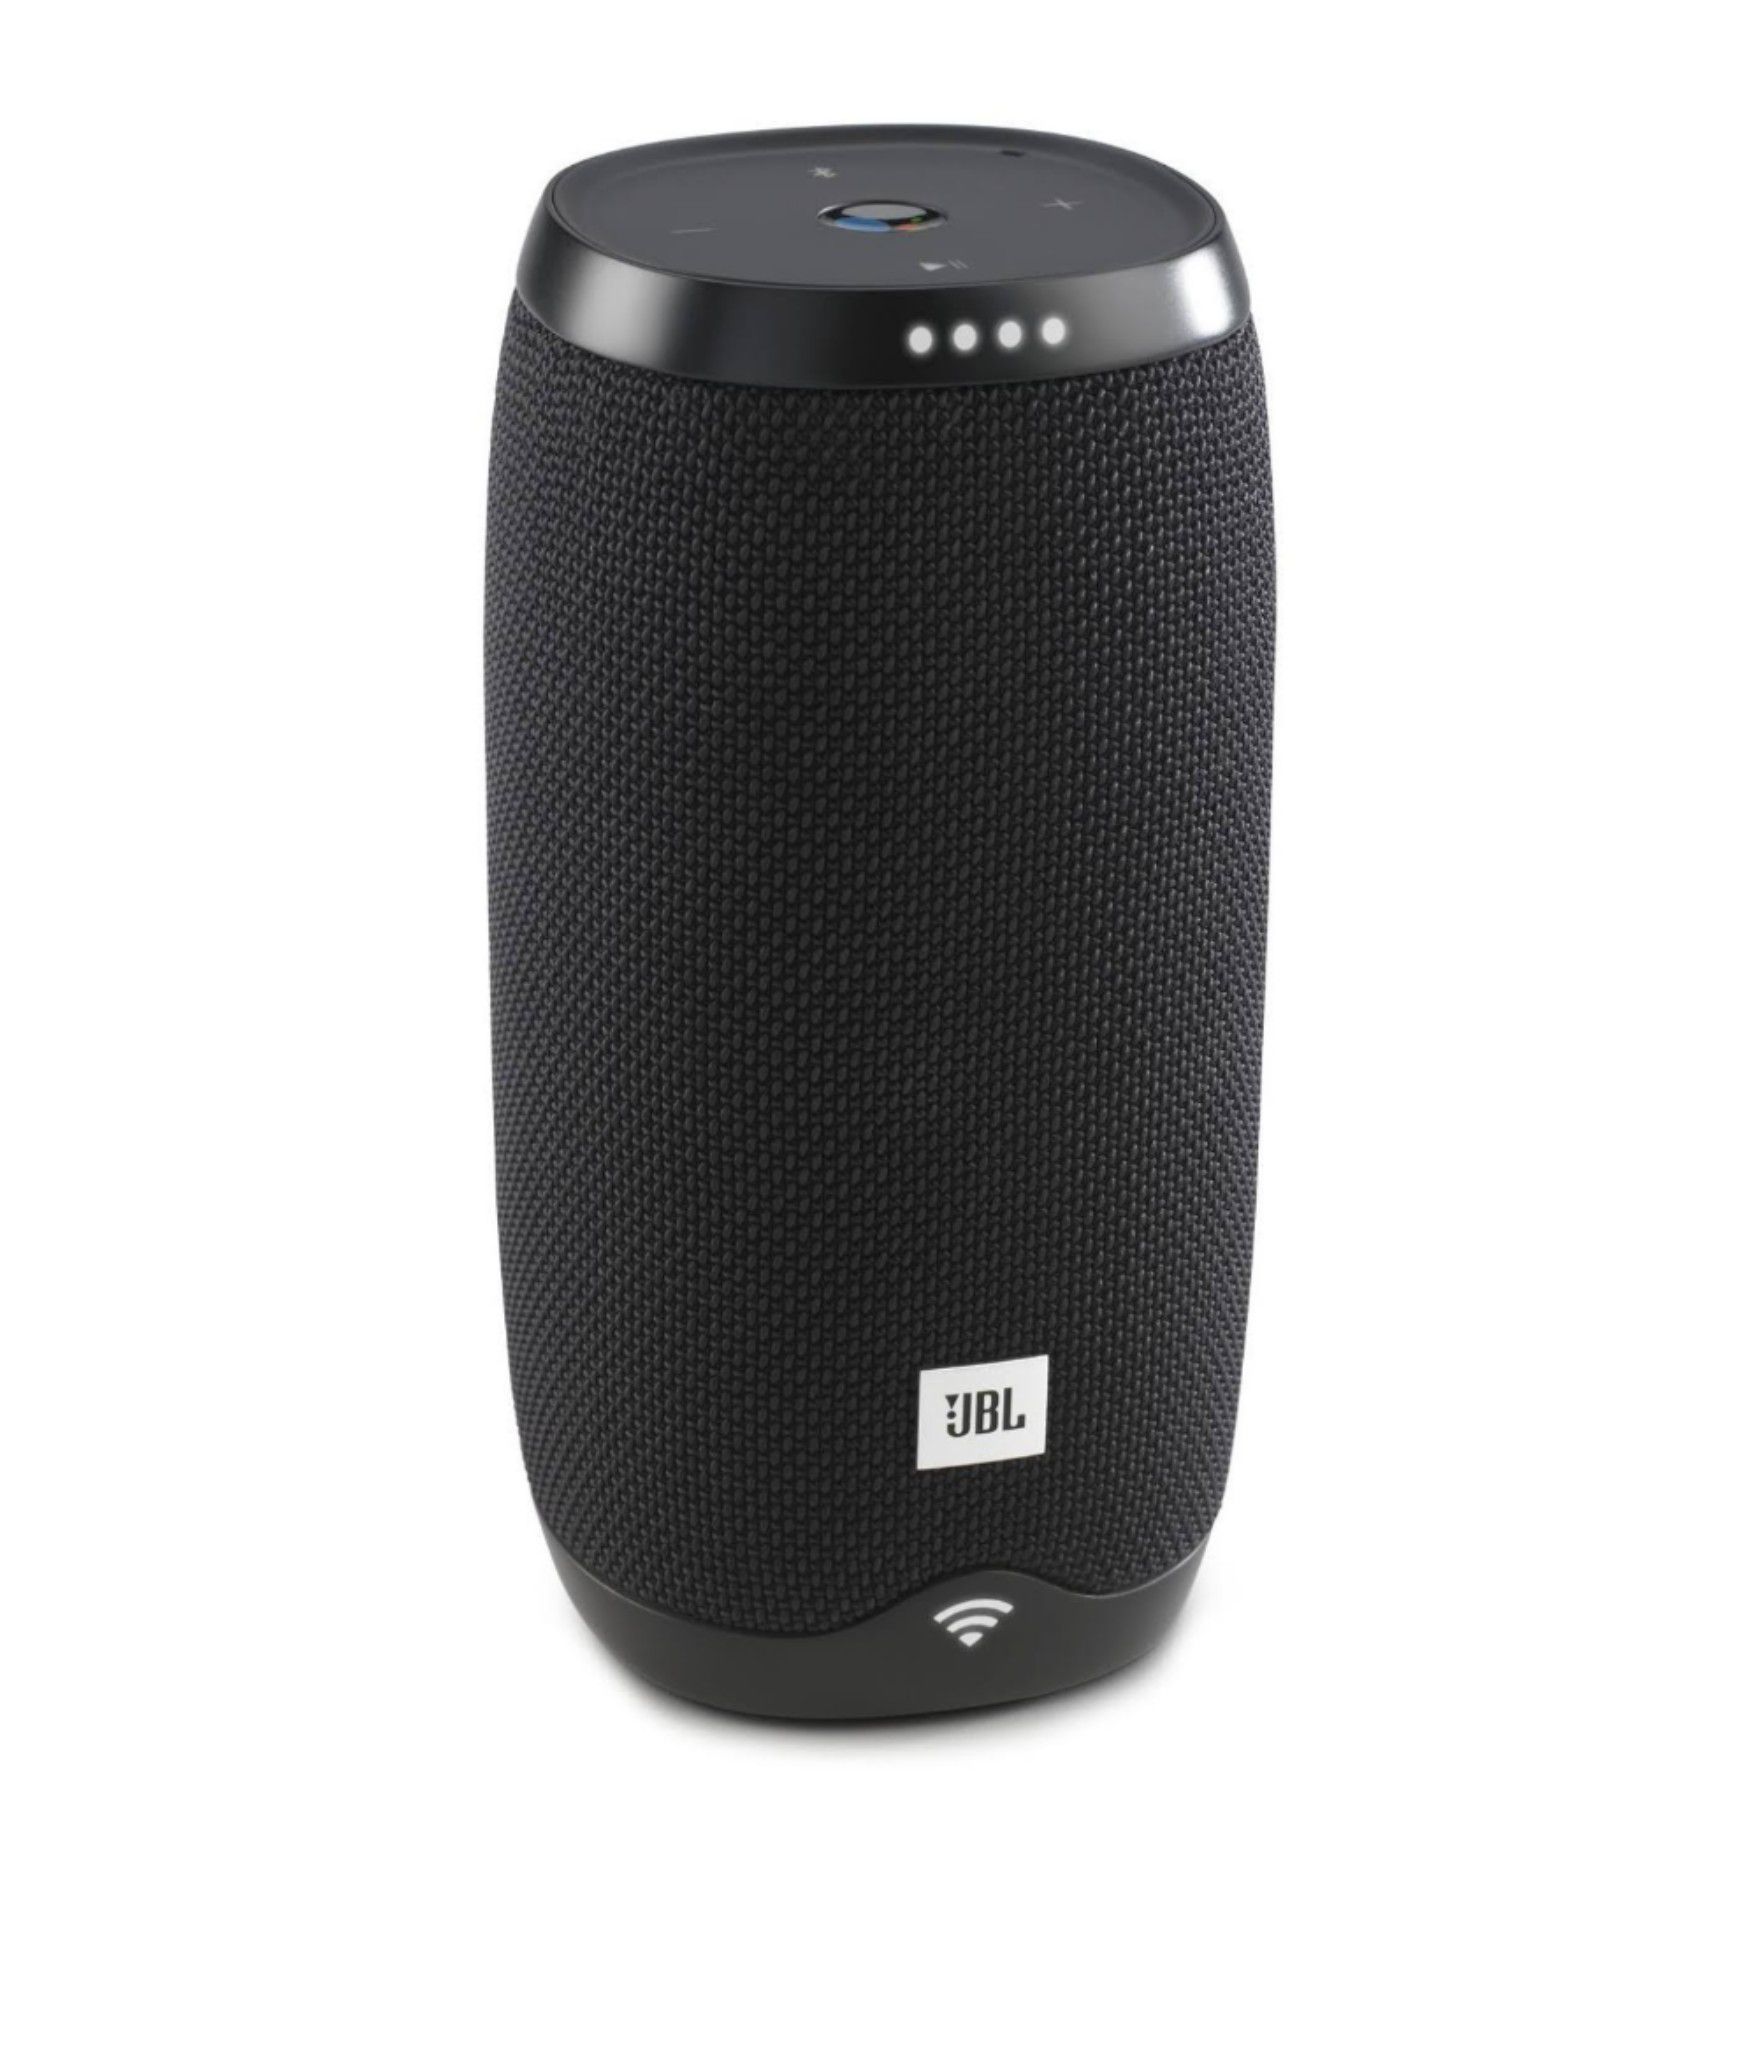 JBL link 20 Voice Activated Google Assistant Bluetooth Portable speaker